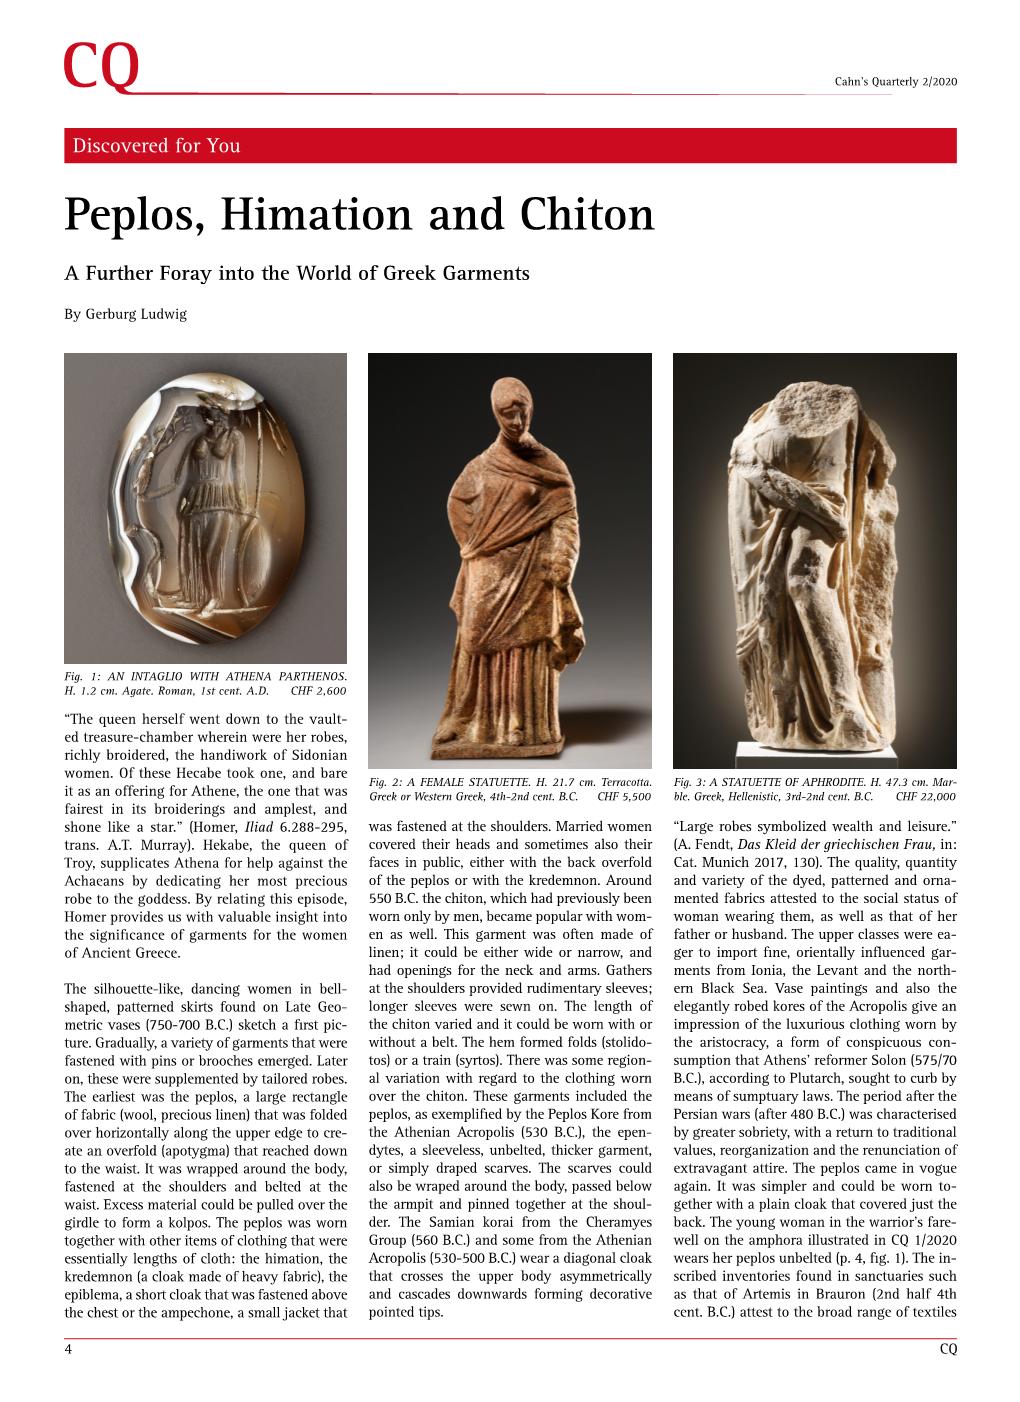 Peplos, Himation and Chiton